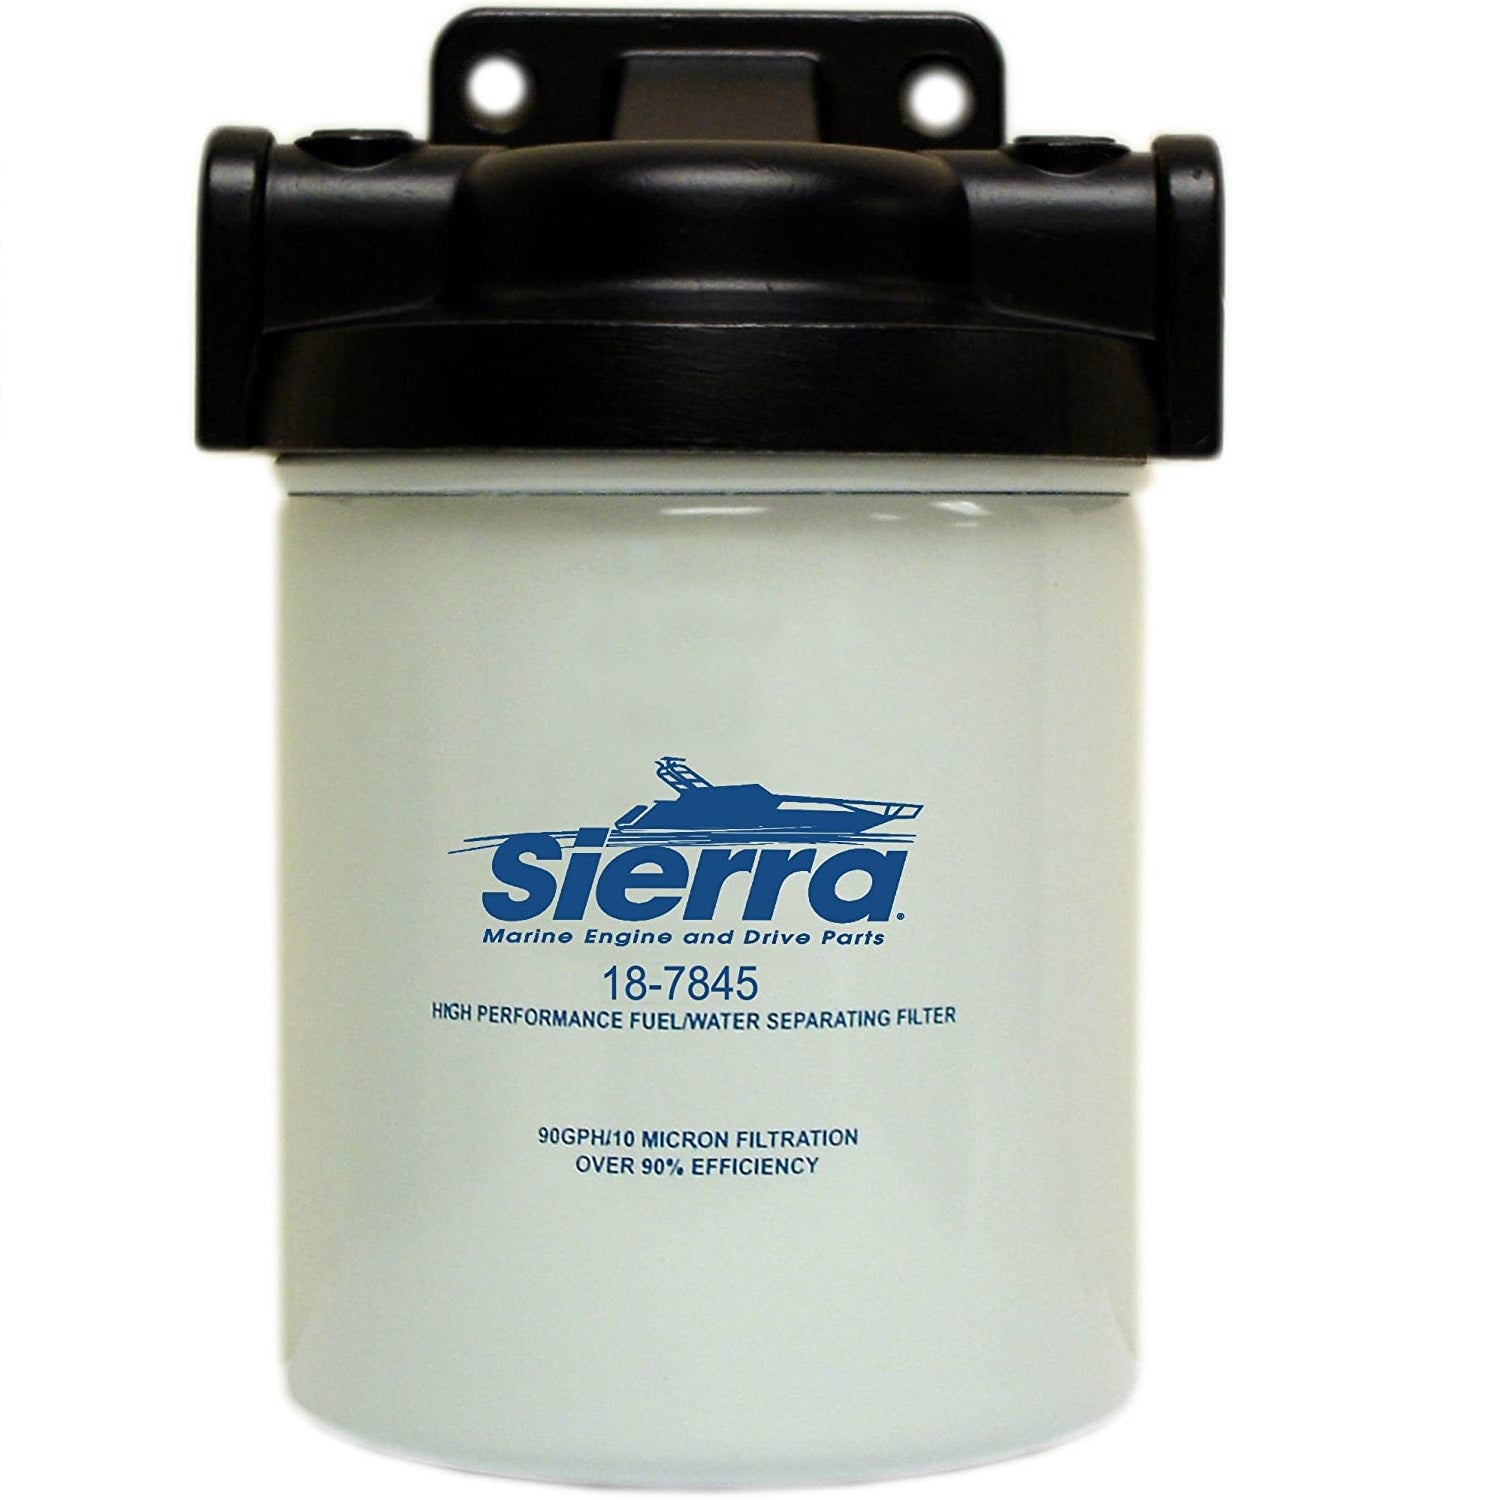 Sierra Fuel/Water Separating Filter Kit